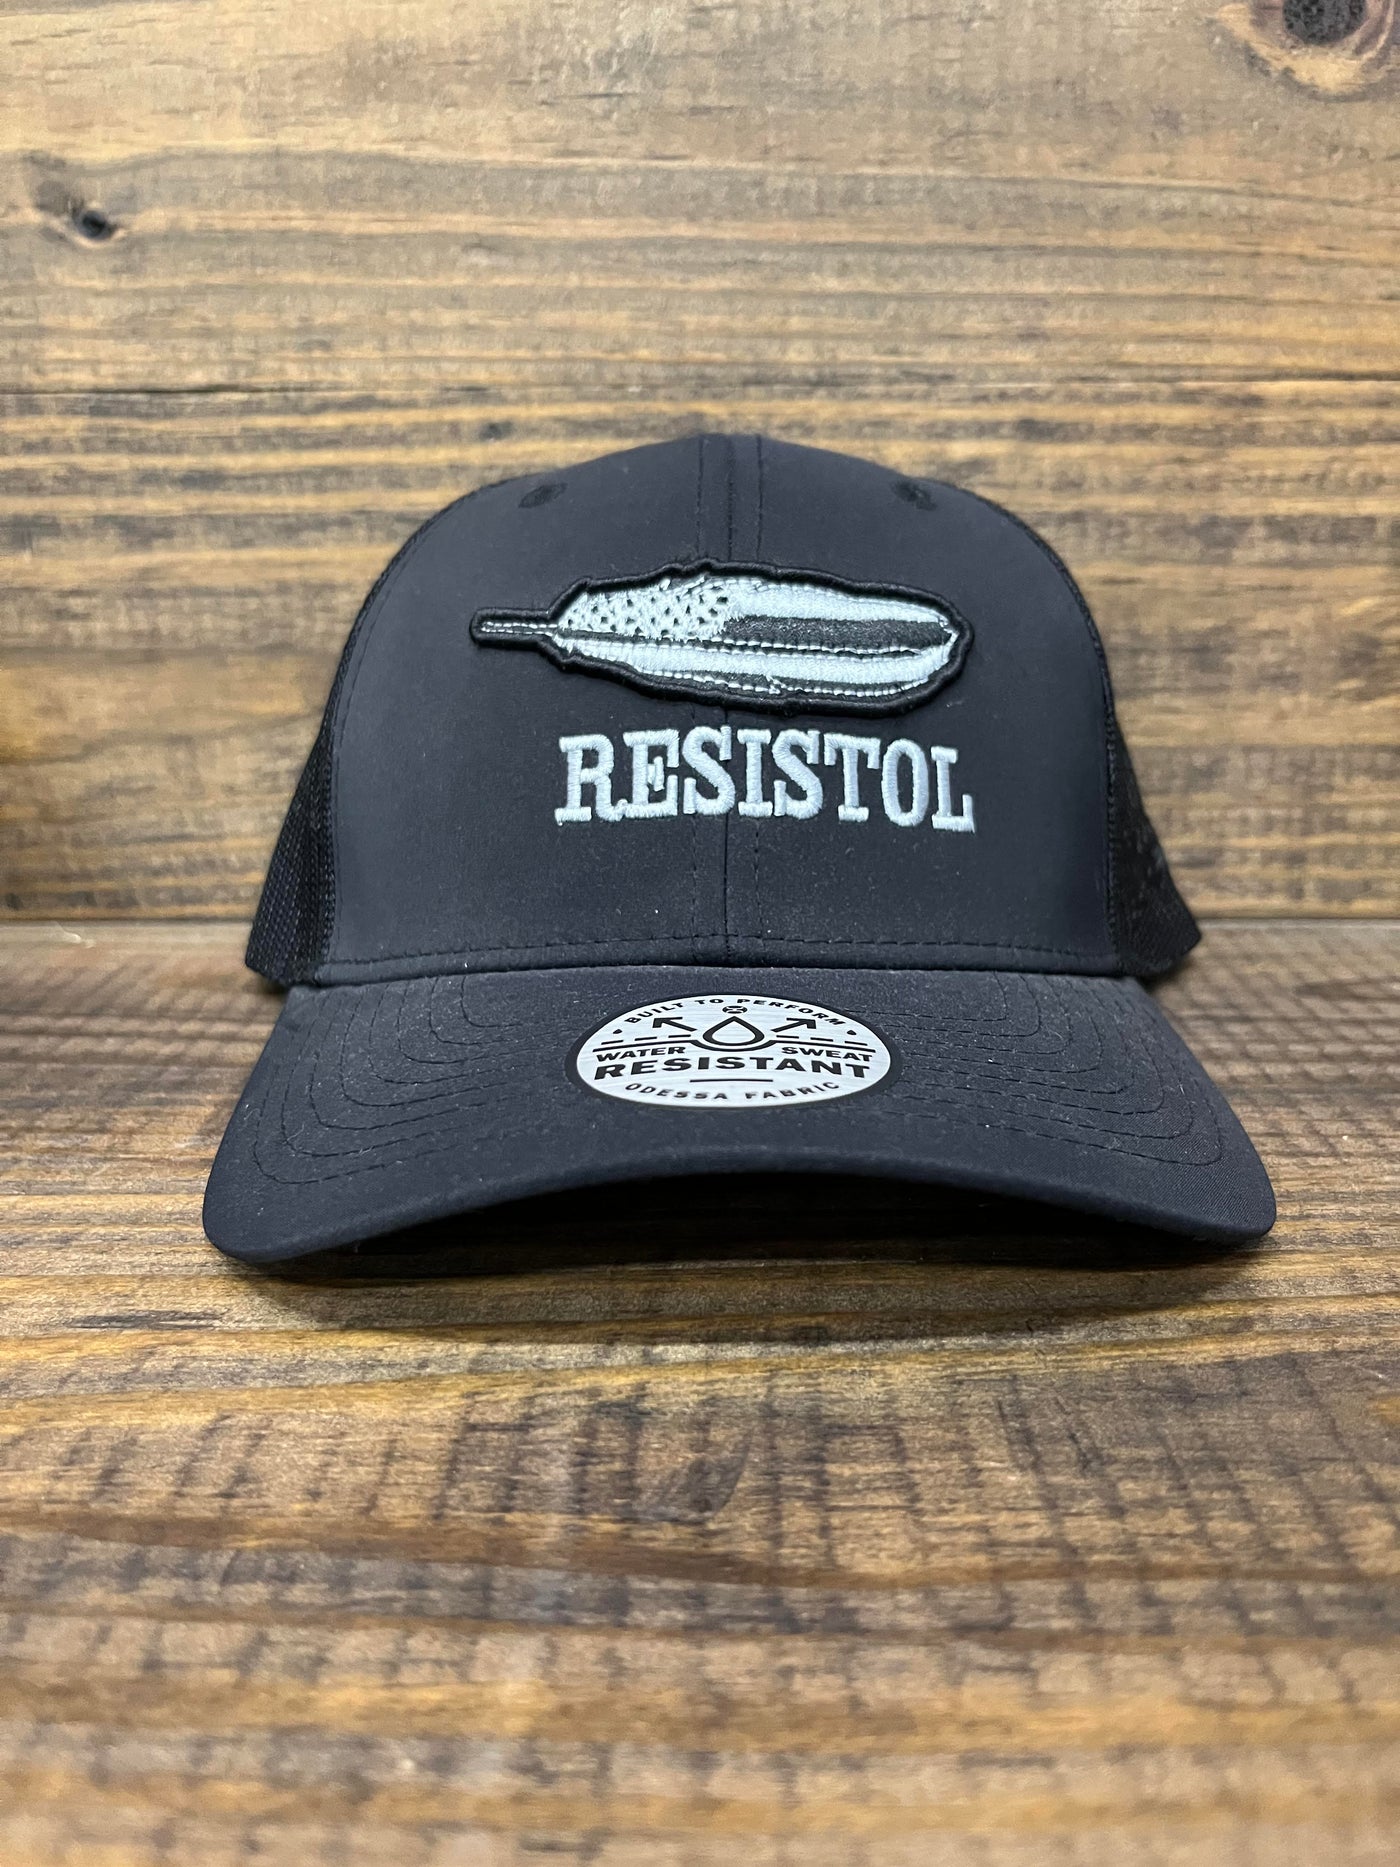 Resistol Black Feather Hat